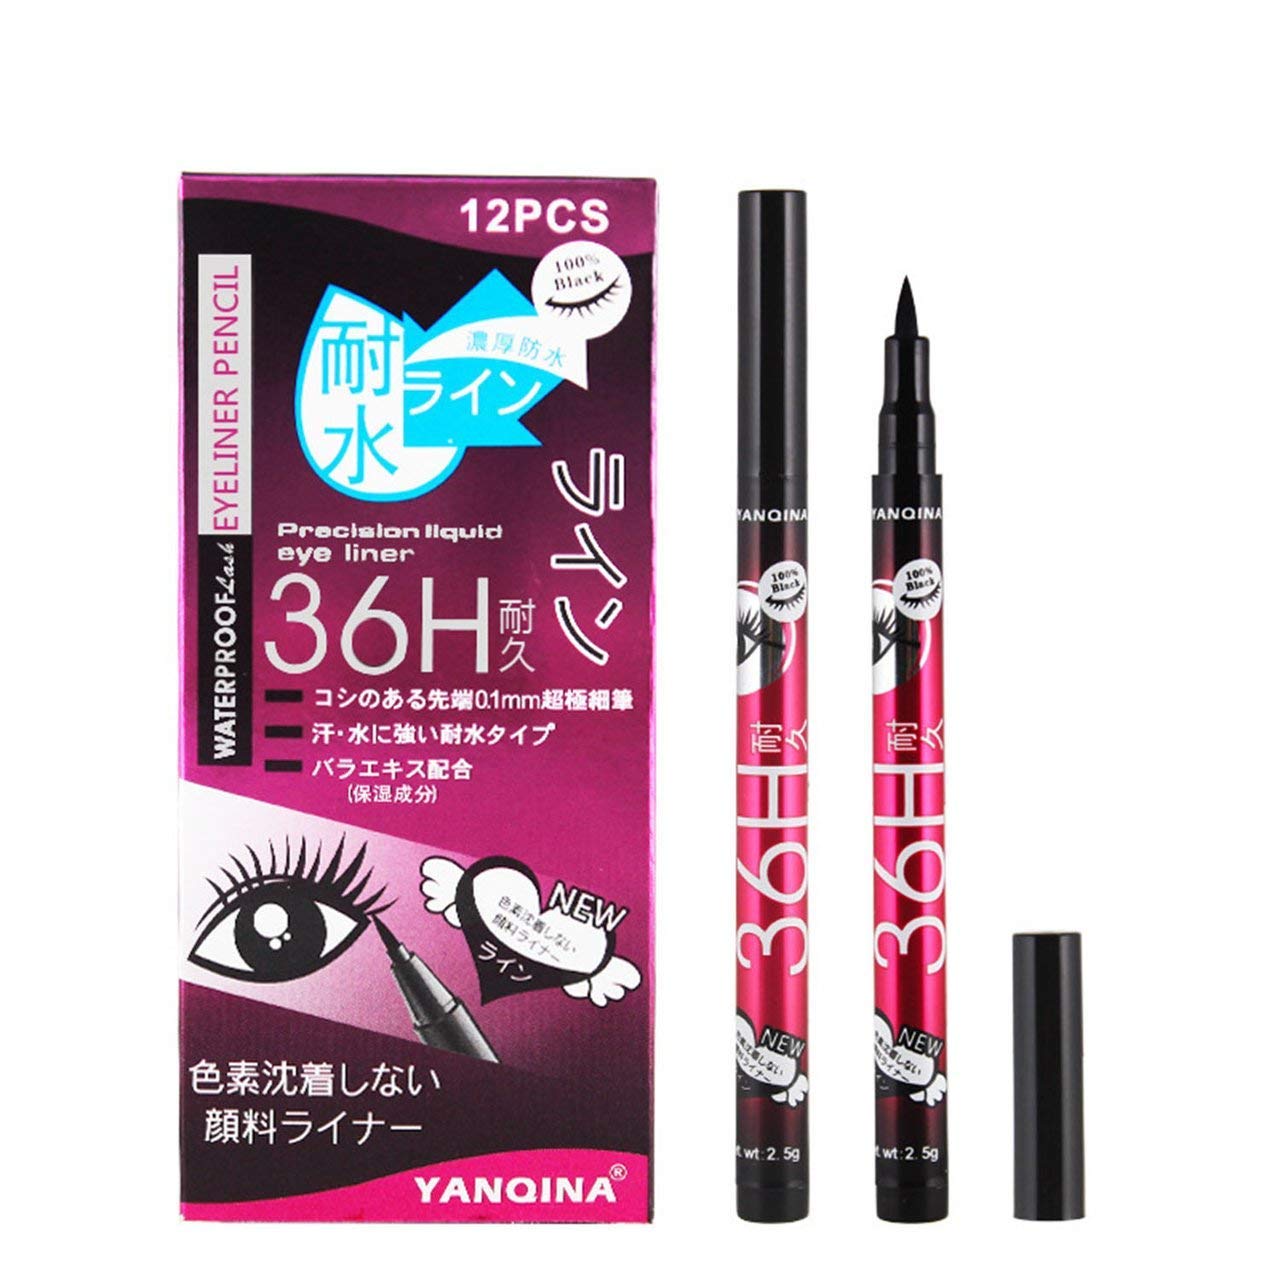 Gnker Eyeliner Waterproof Professional Liquid Long Lasting Cosmetics Eye Liner Pen Black 12 pcs